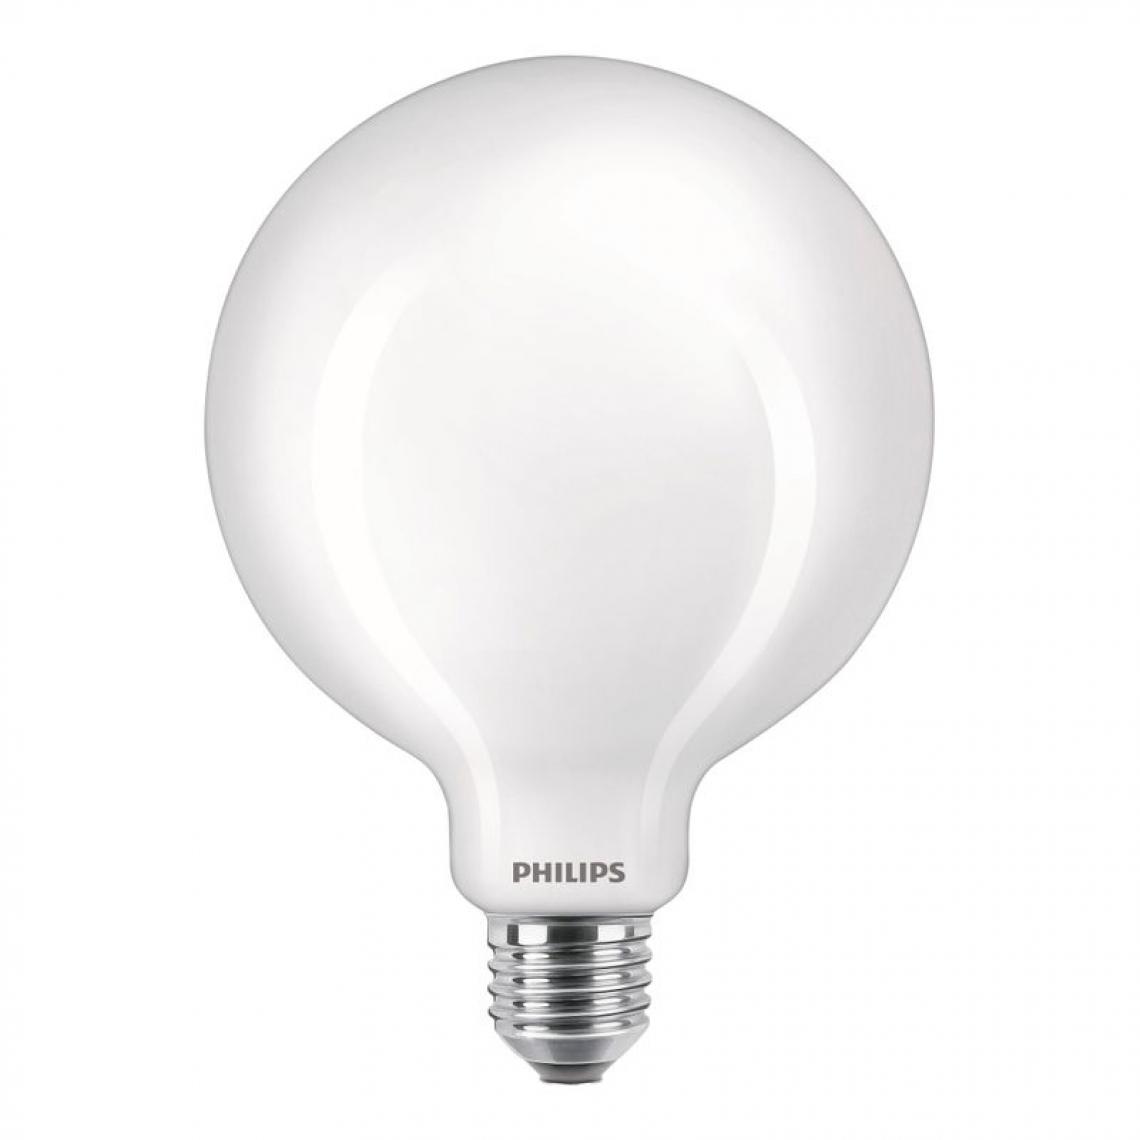 Philips - Ampoule LED globe E27 PHILIPS EQ100W blanc chaud - Ampoules LED